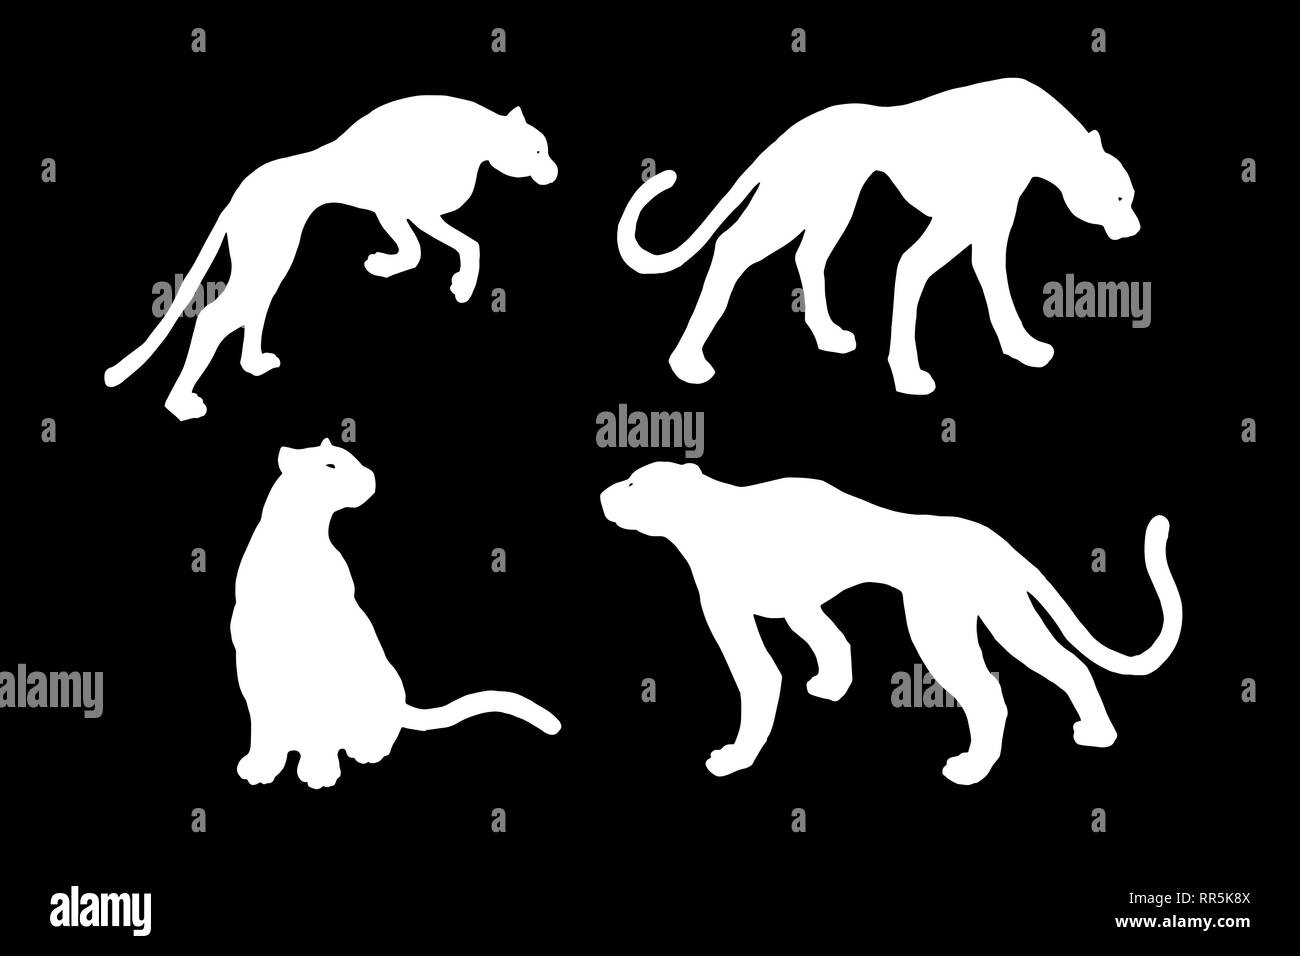 Drawn jaguar, leopard, wild cat, panther silhouettes Stock Vector